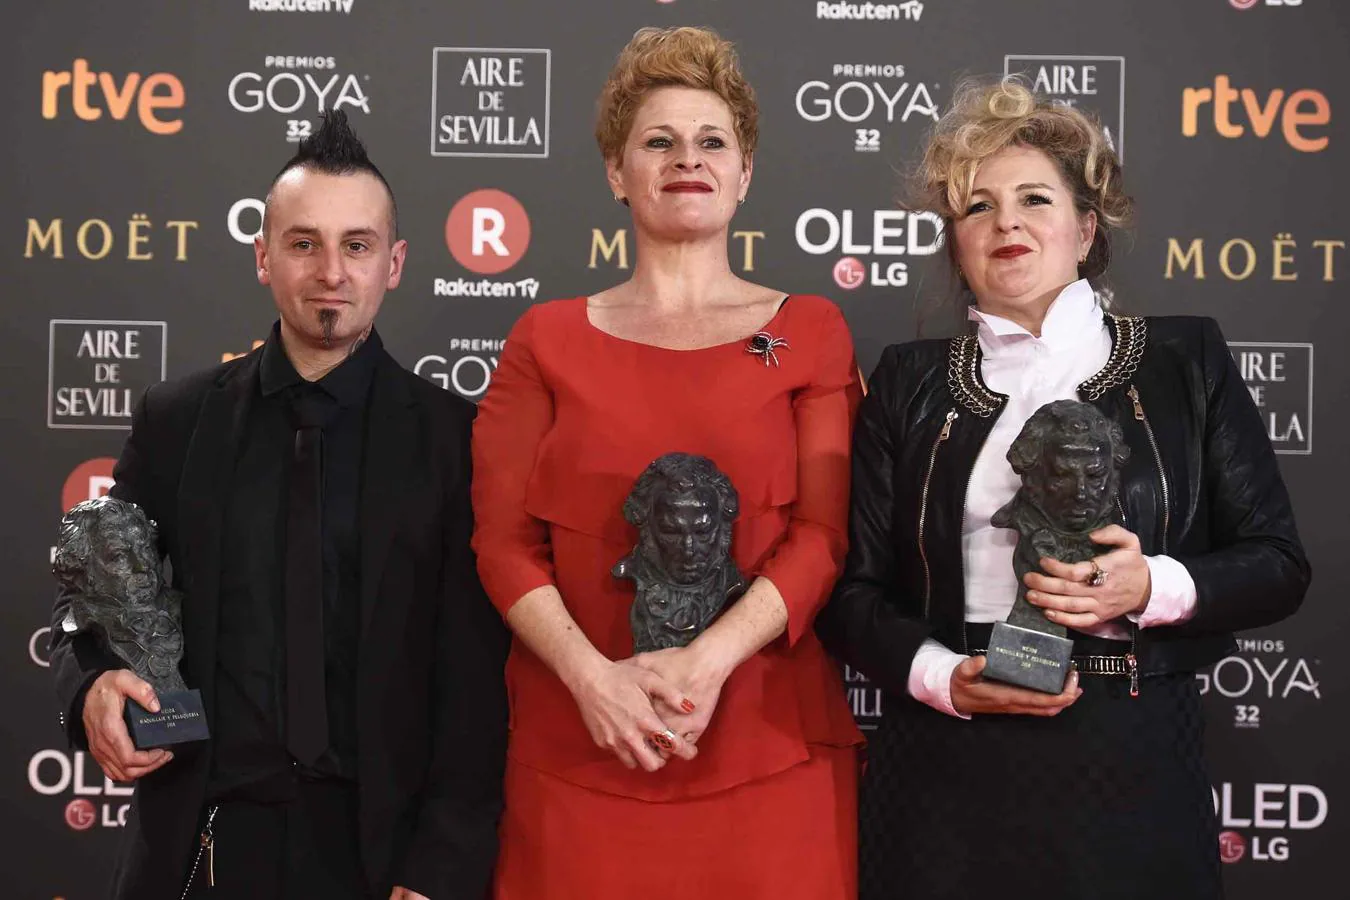 Ganadores Premios Goya 2018: Ainhoa Eskisabel, Olga Cruz y Gorka Aguirre